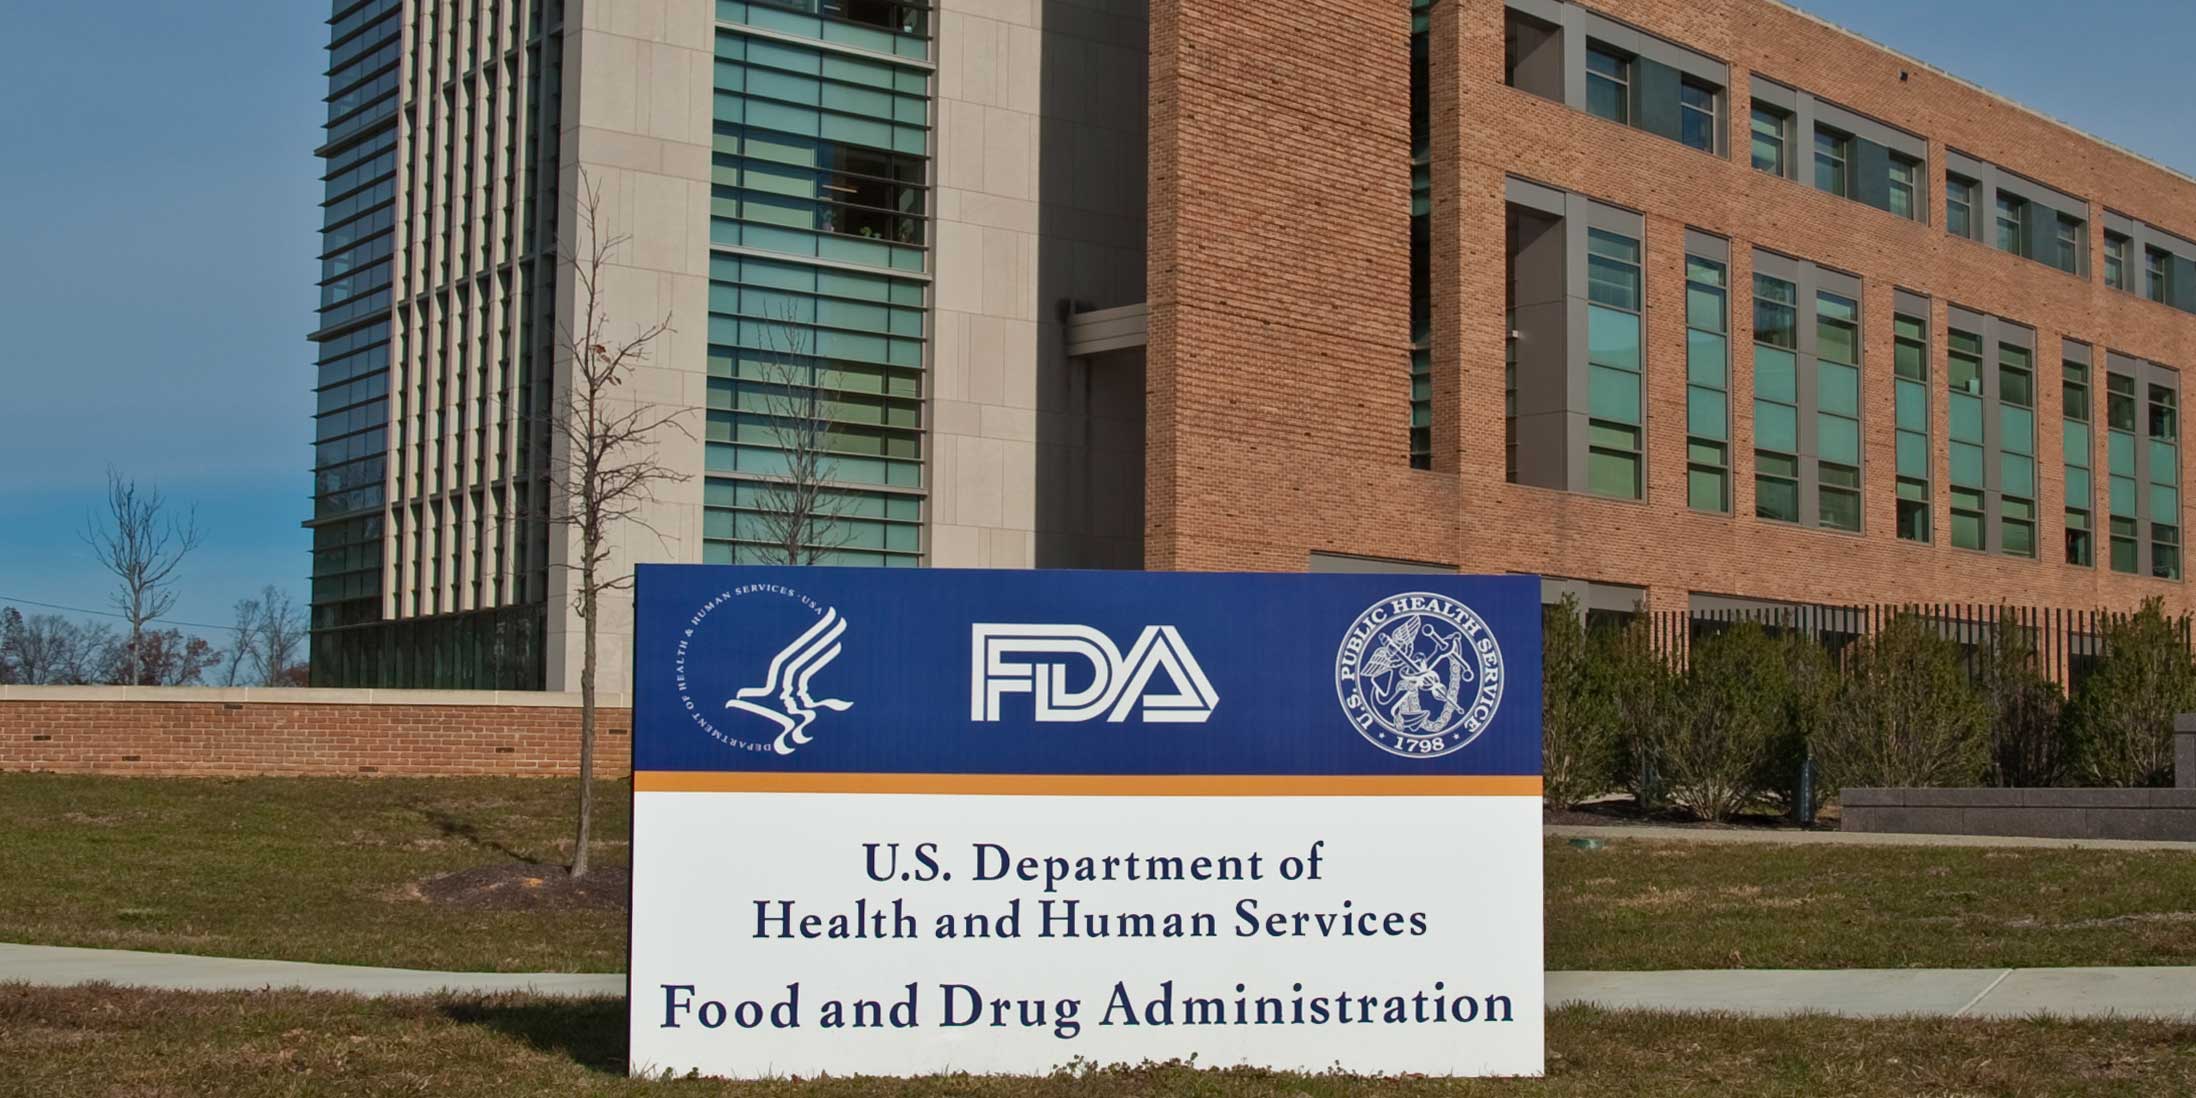 Action Alert: Reform the FDA